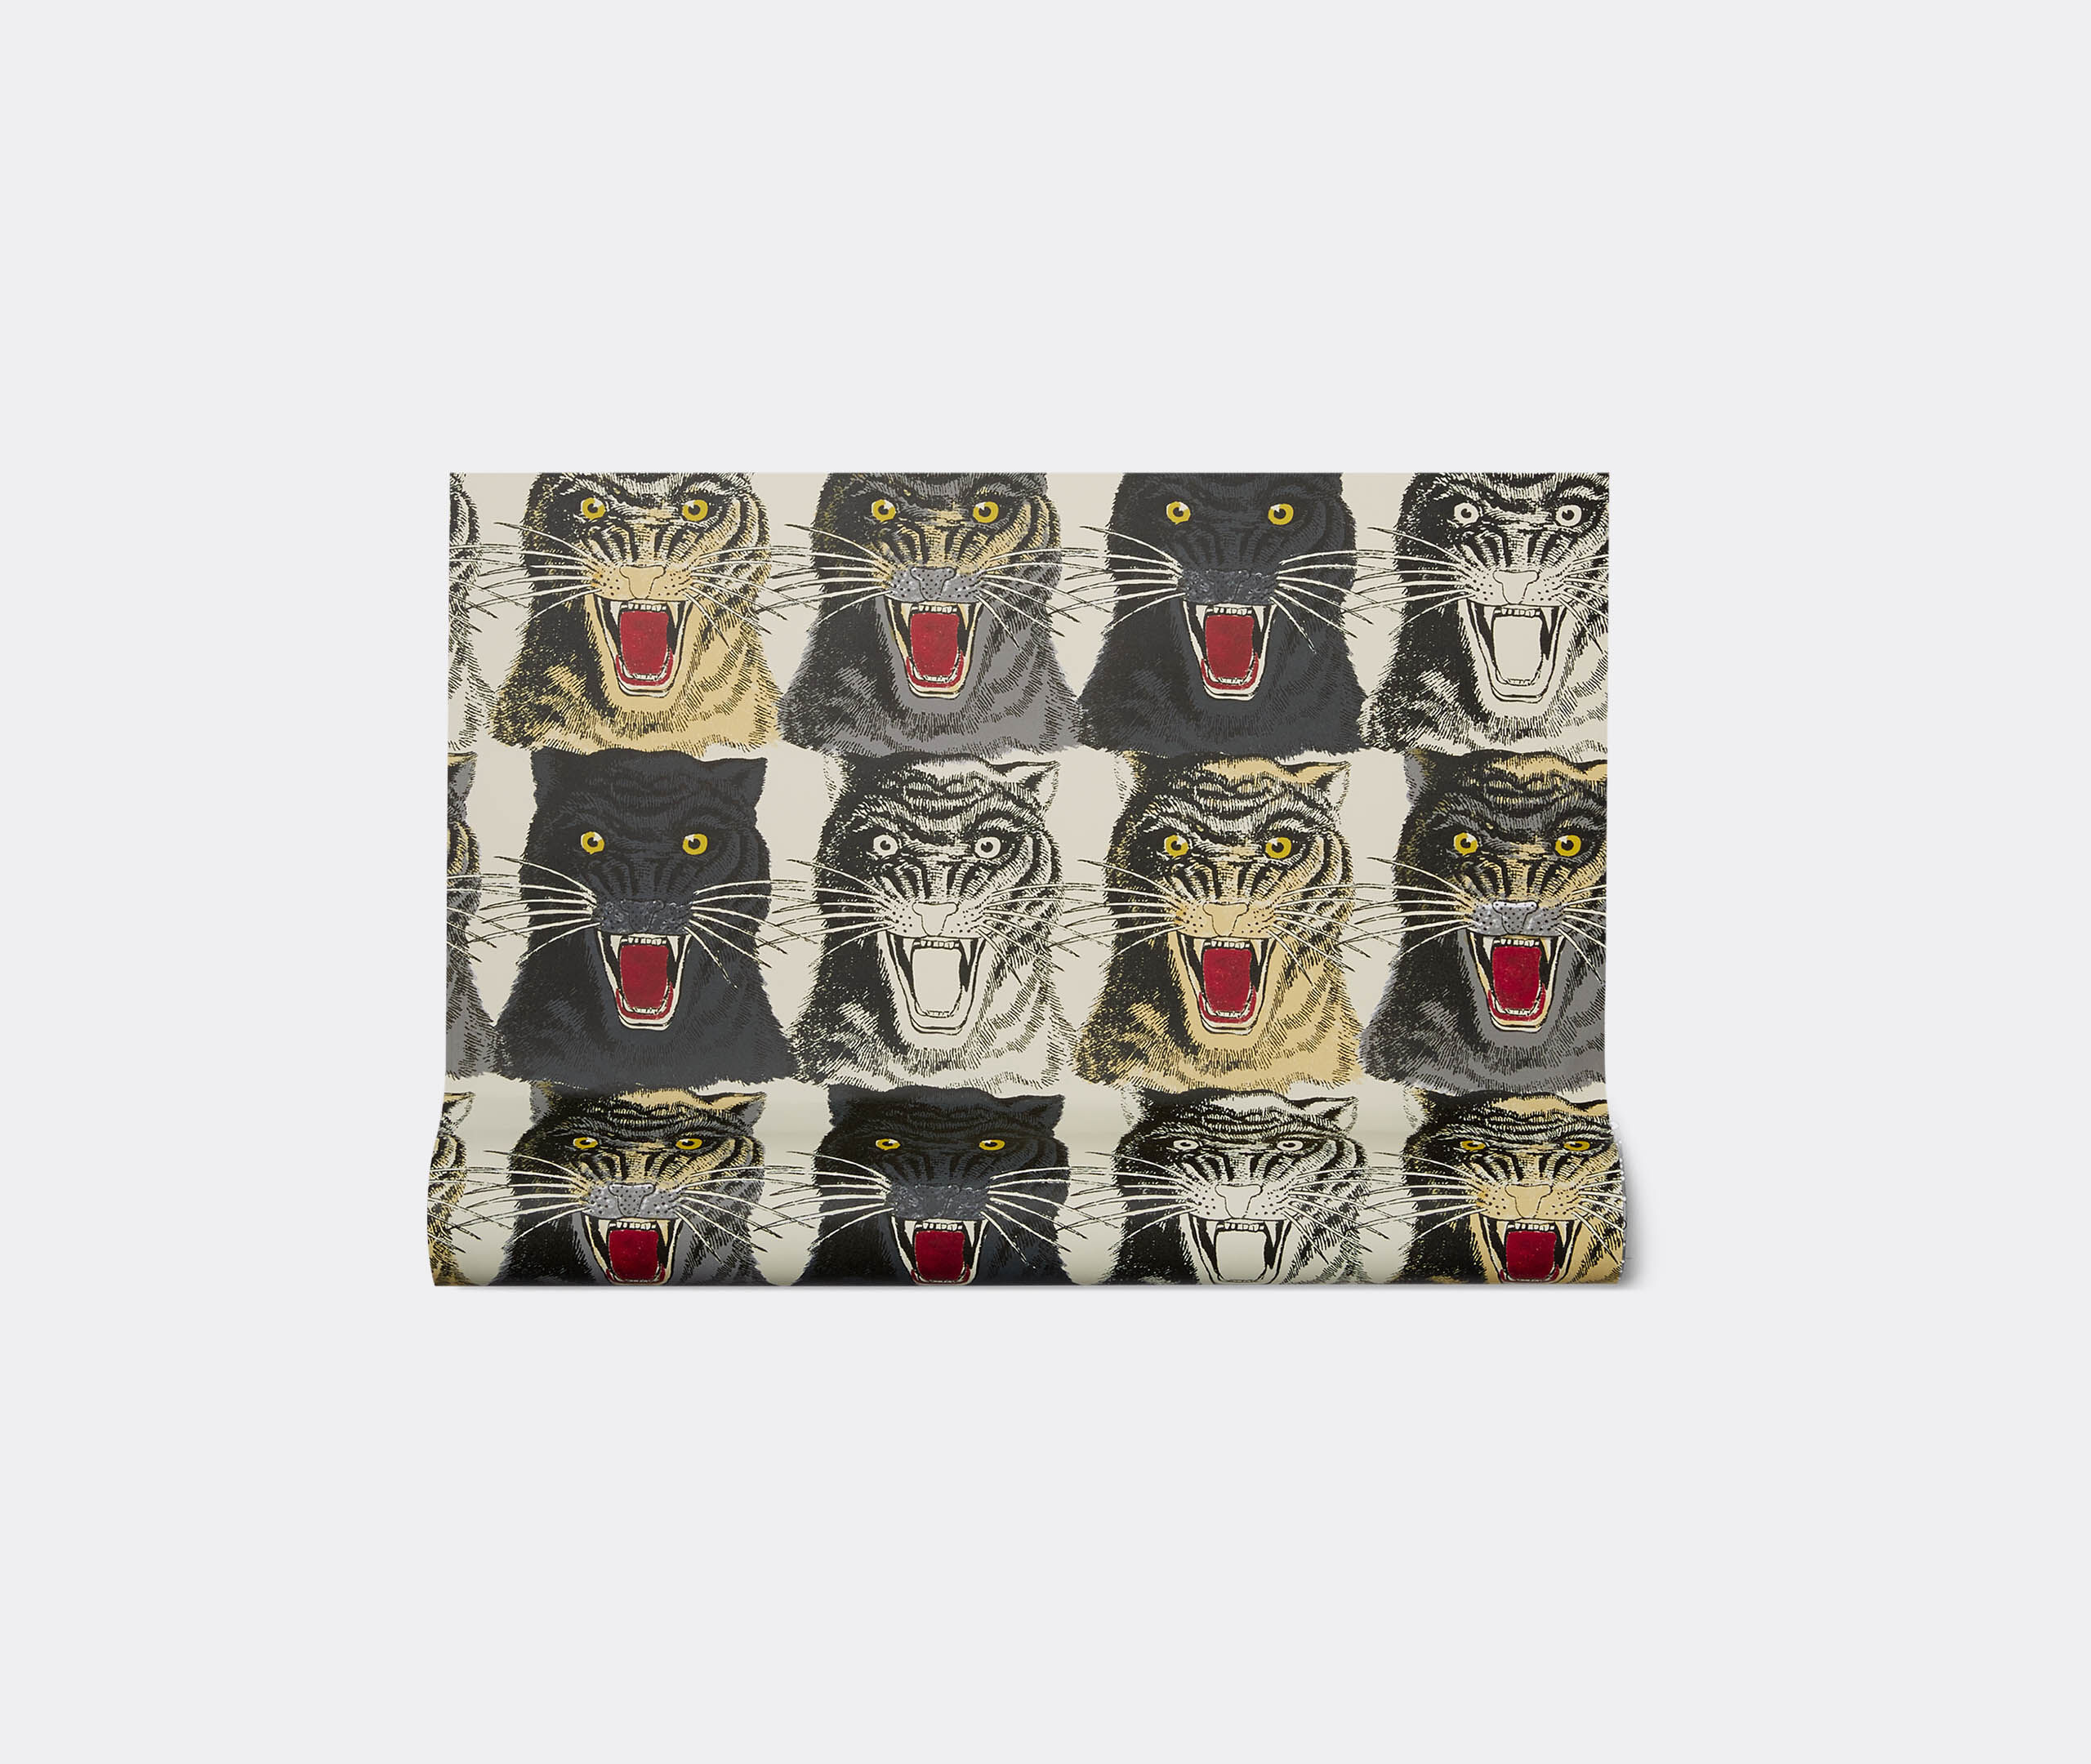 Gucci Tiger wallpaper by Sneks99  Download on ZEDGE  d4b4